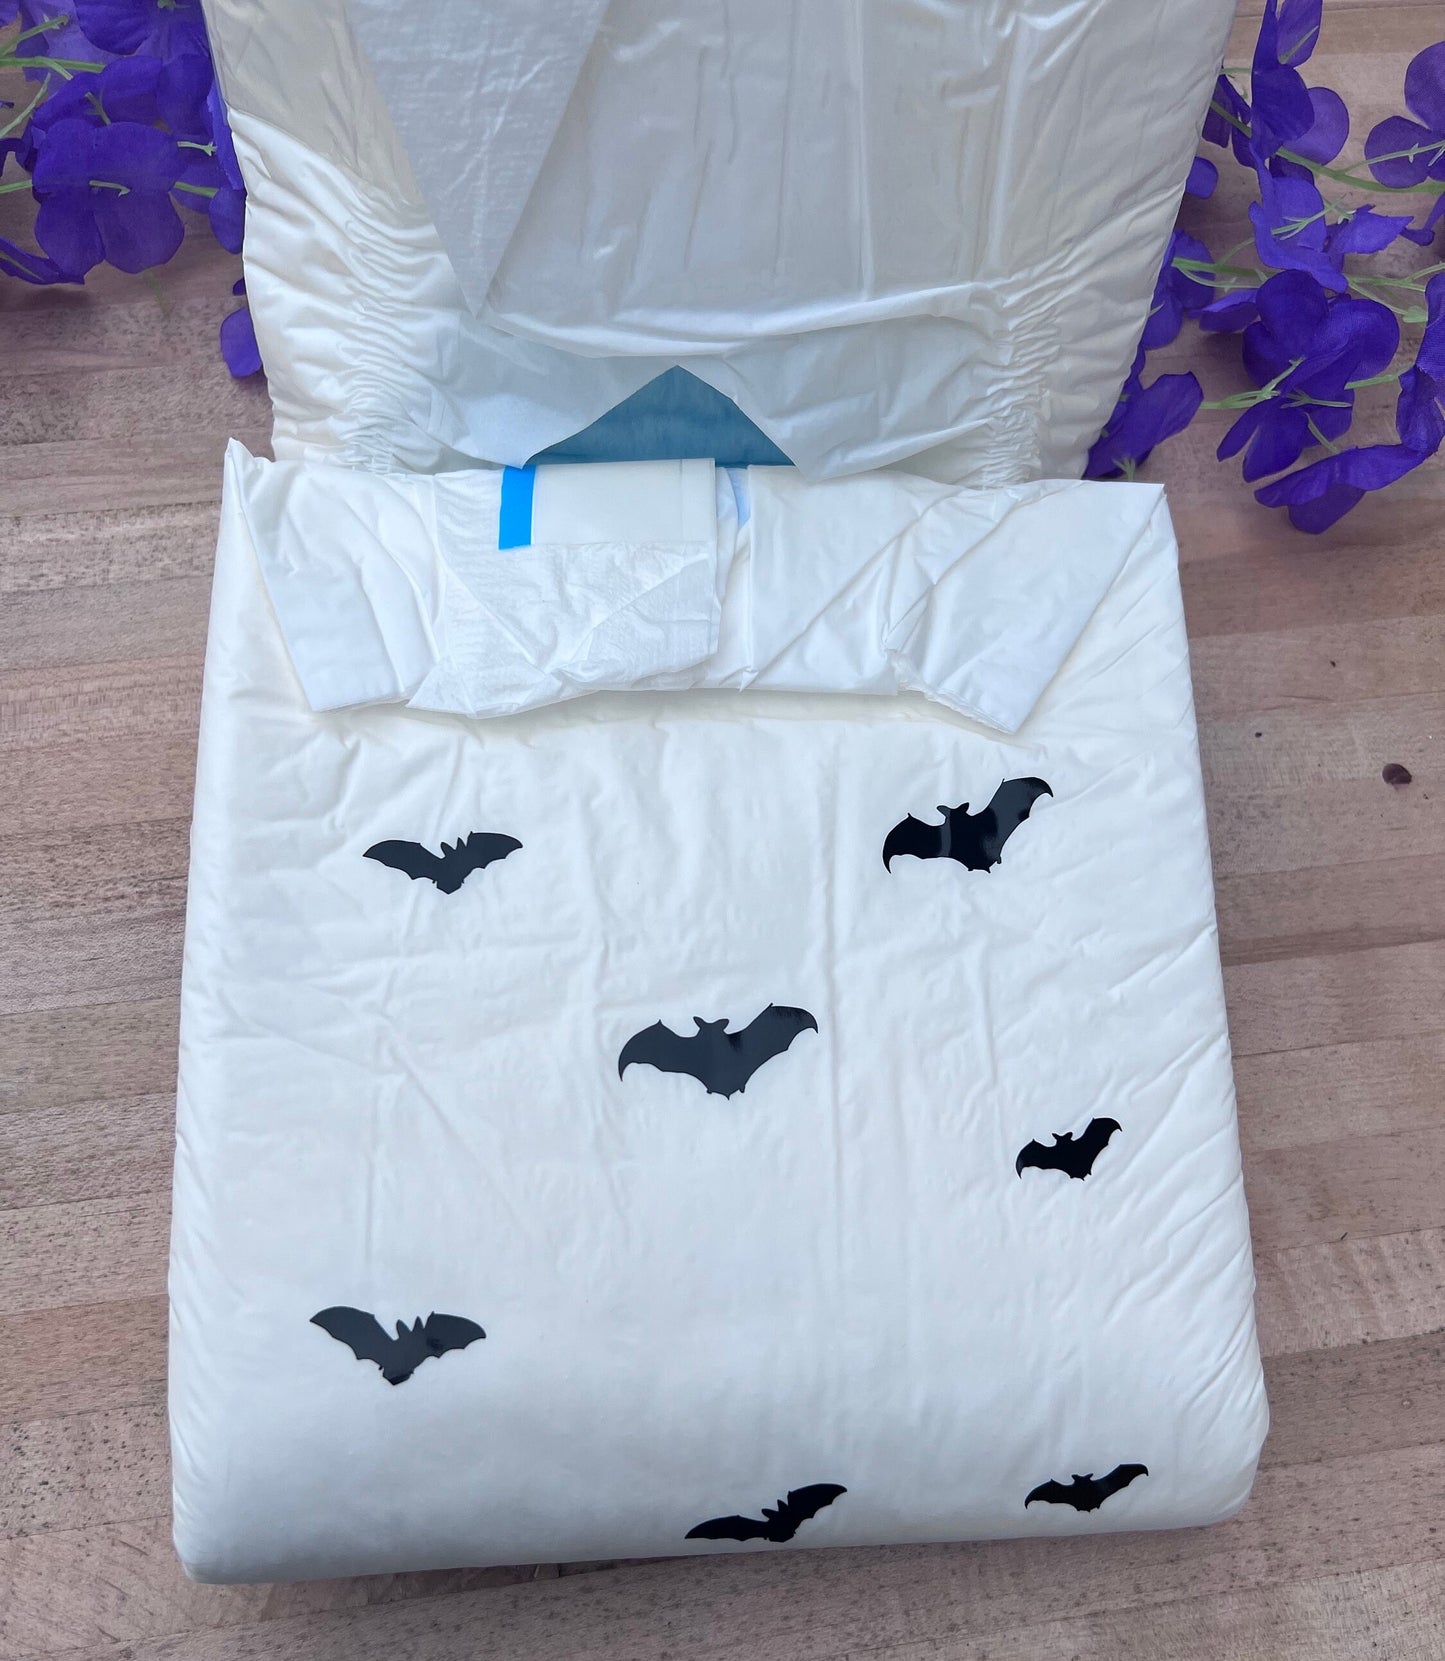 ABDL Adult Diaper Tape Set of 4 - Baby Bat ABDL Diaper Design